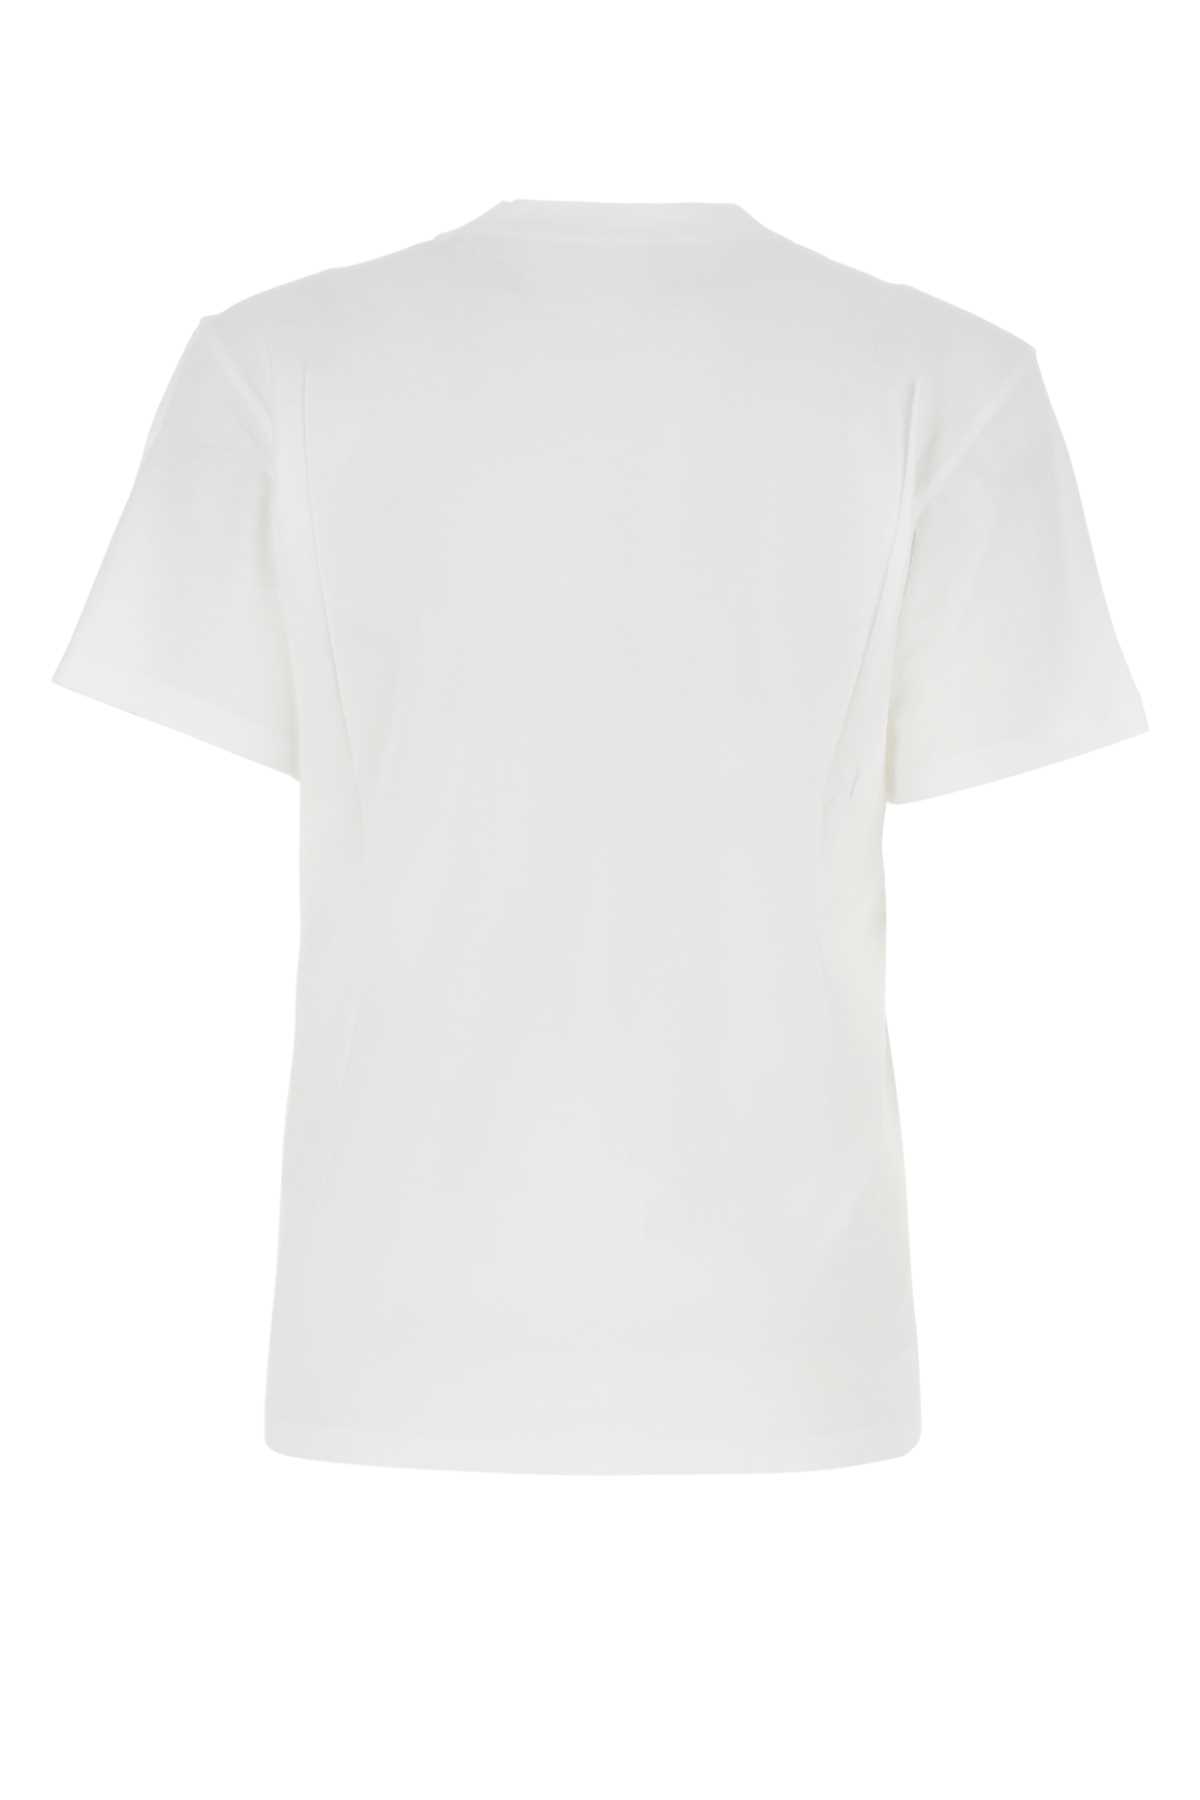 Marant Etoile White Cotton Zewel T-shirt